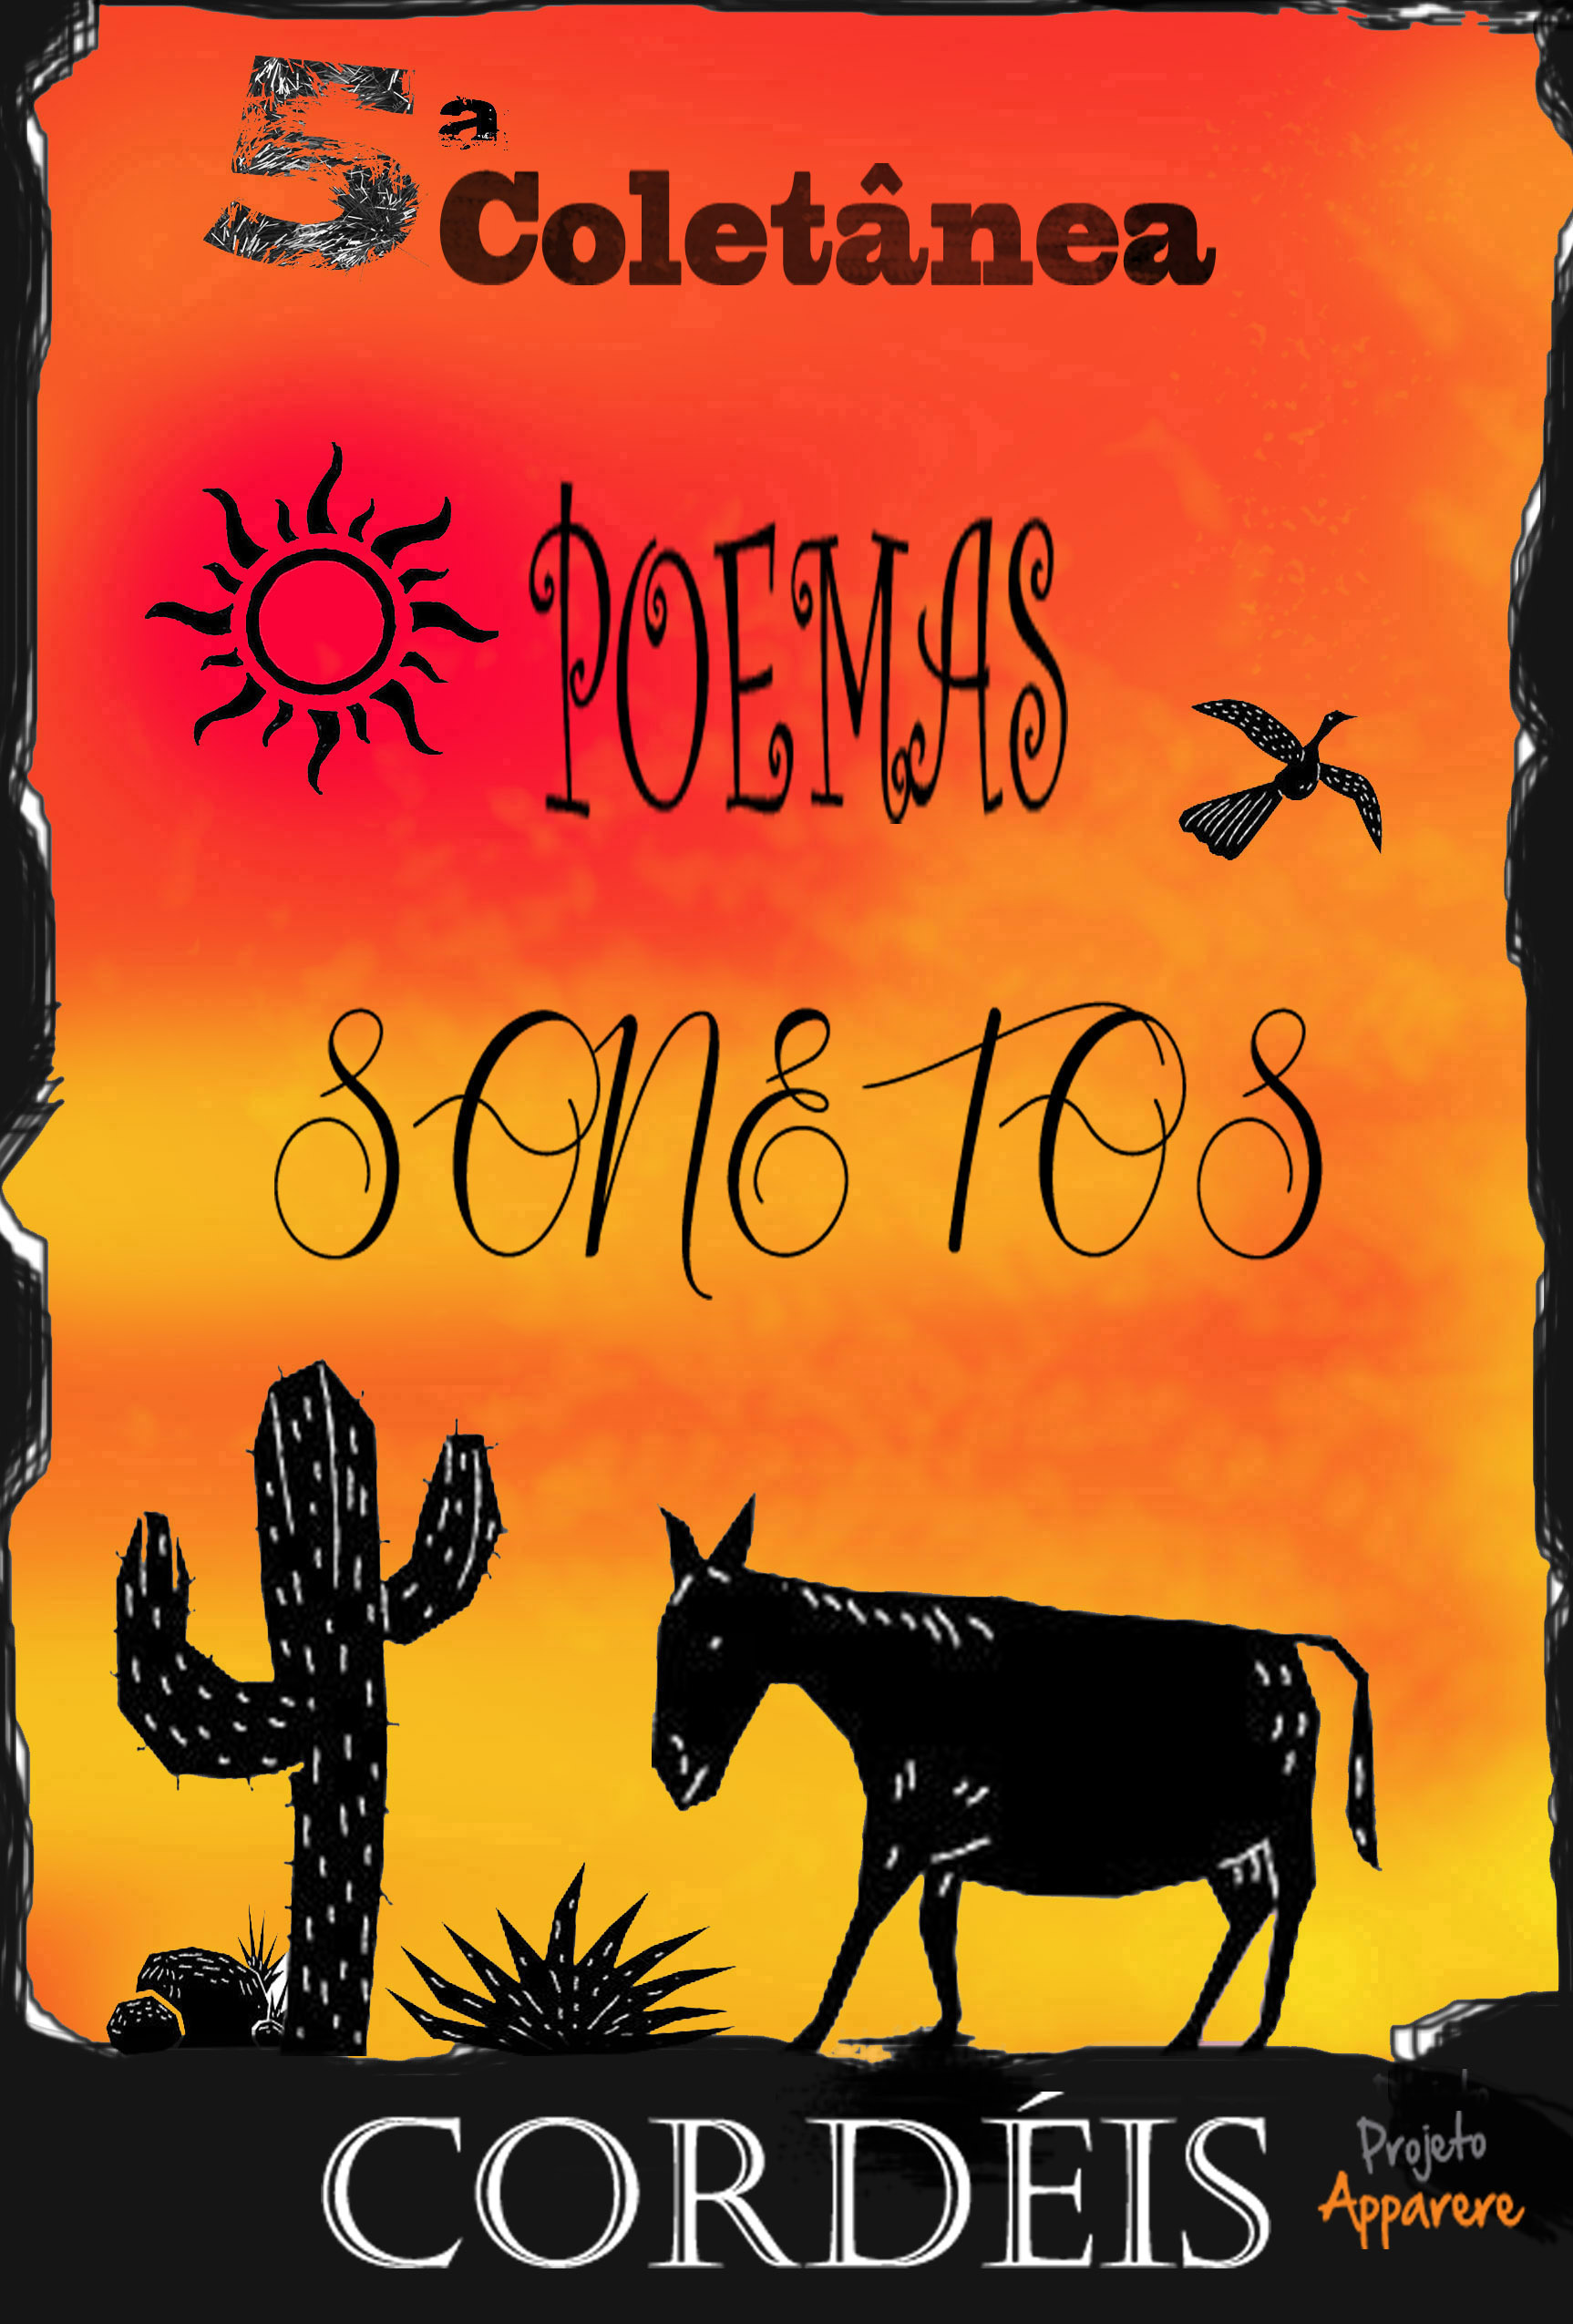 Bienal de Poesia de Oeiras